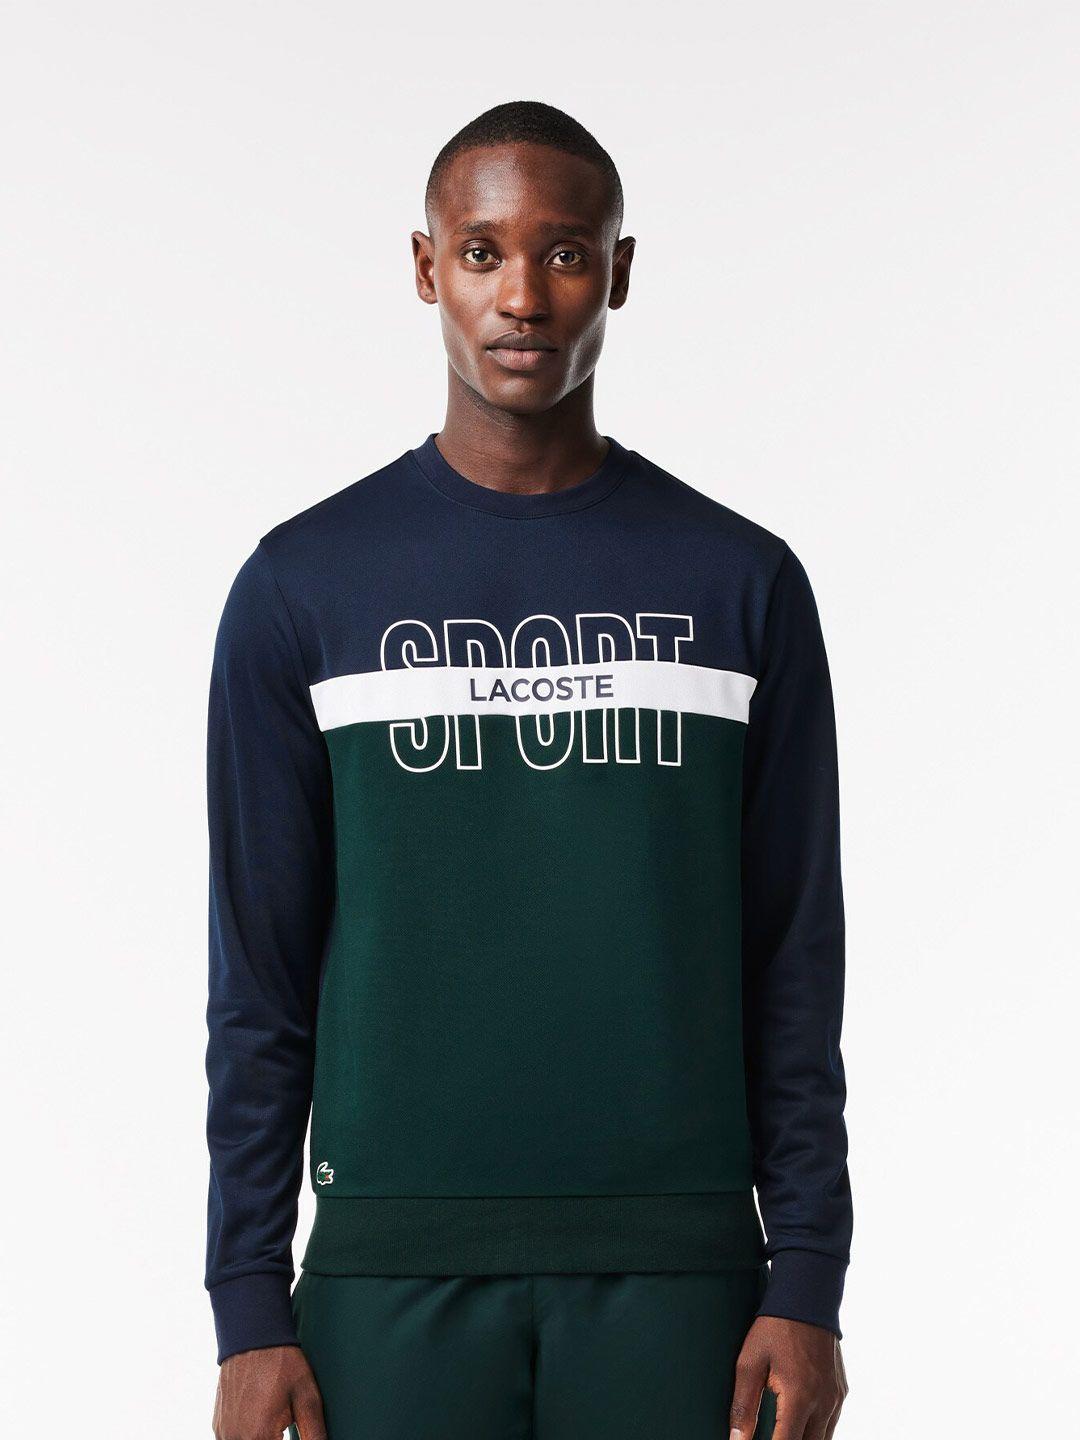 lacoste-typography-printed-pullover-sweatshirt